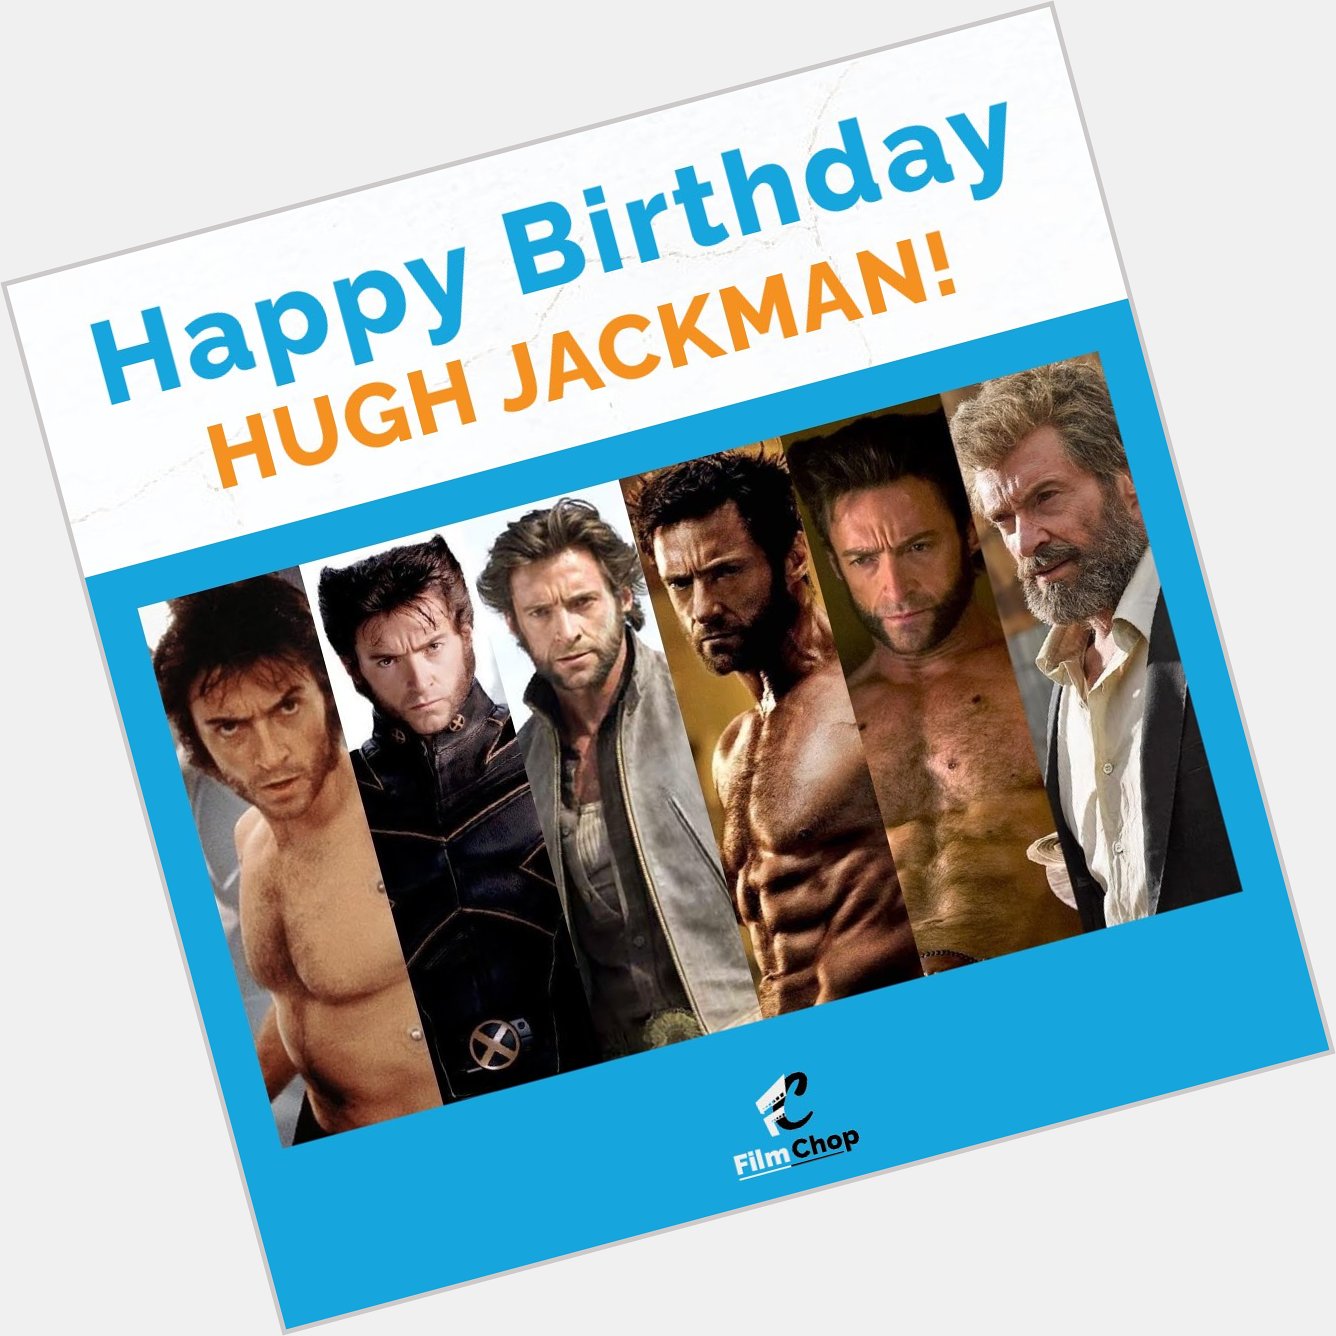 It\s wolverine day! 

Happy 53rd birthday to the phenomenal Hugh Jackman! 